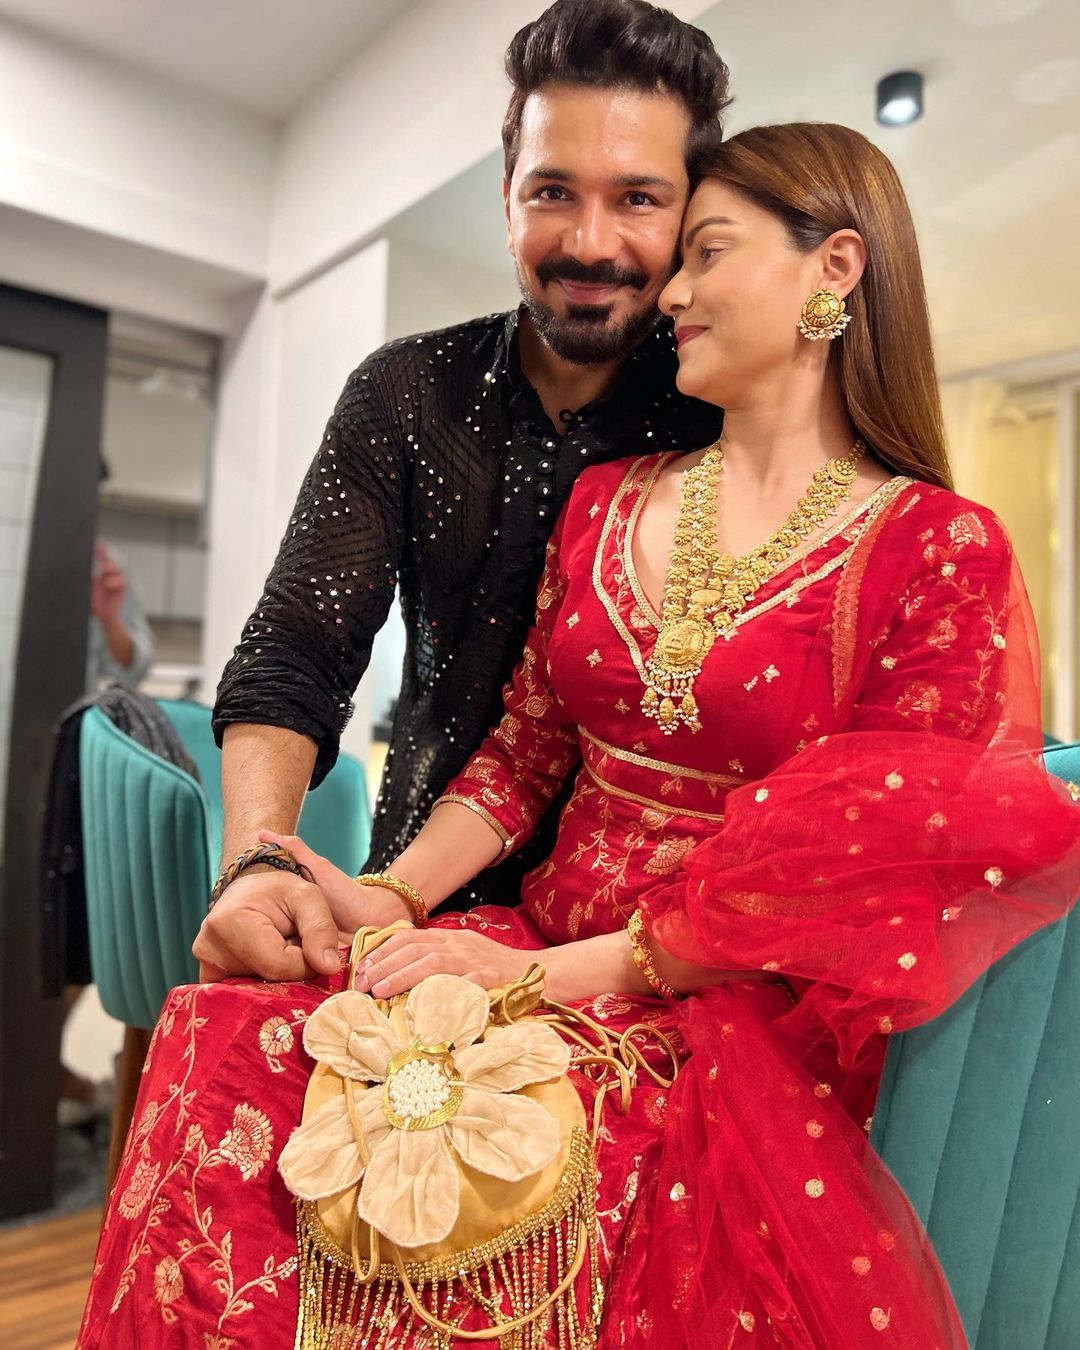 Rubina Dilaik With Her Husband Abhinav Shukla K4 Fashion